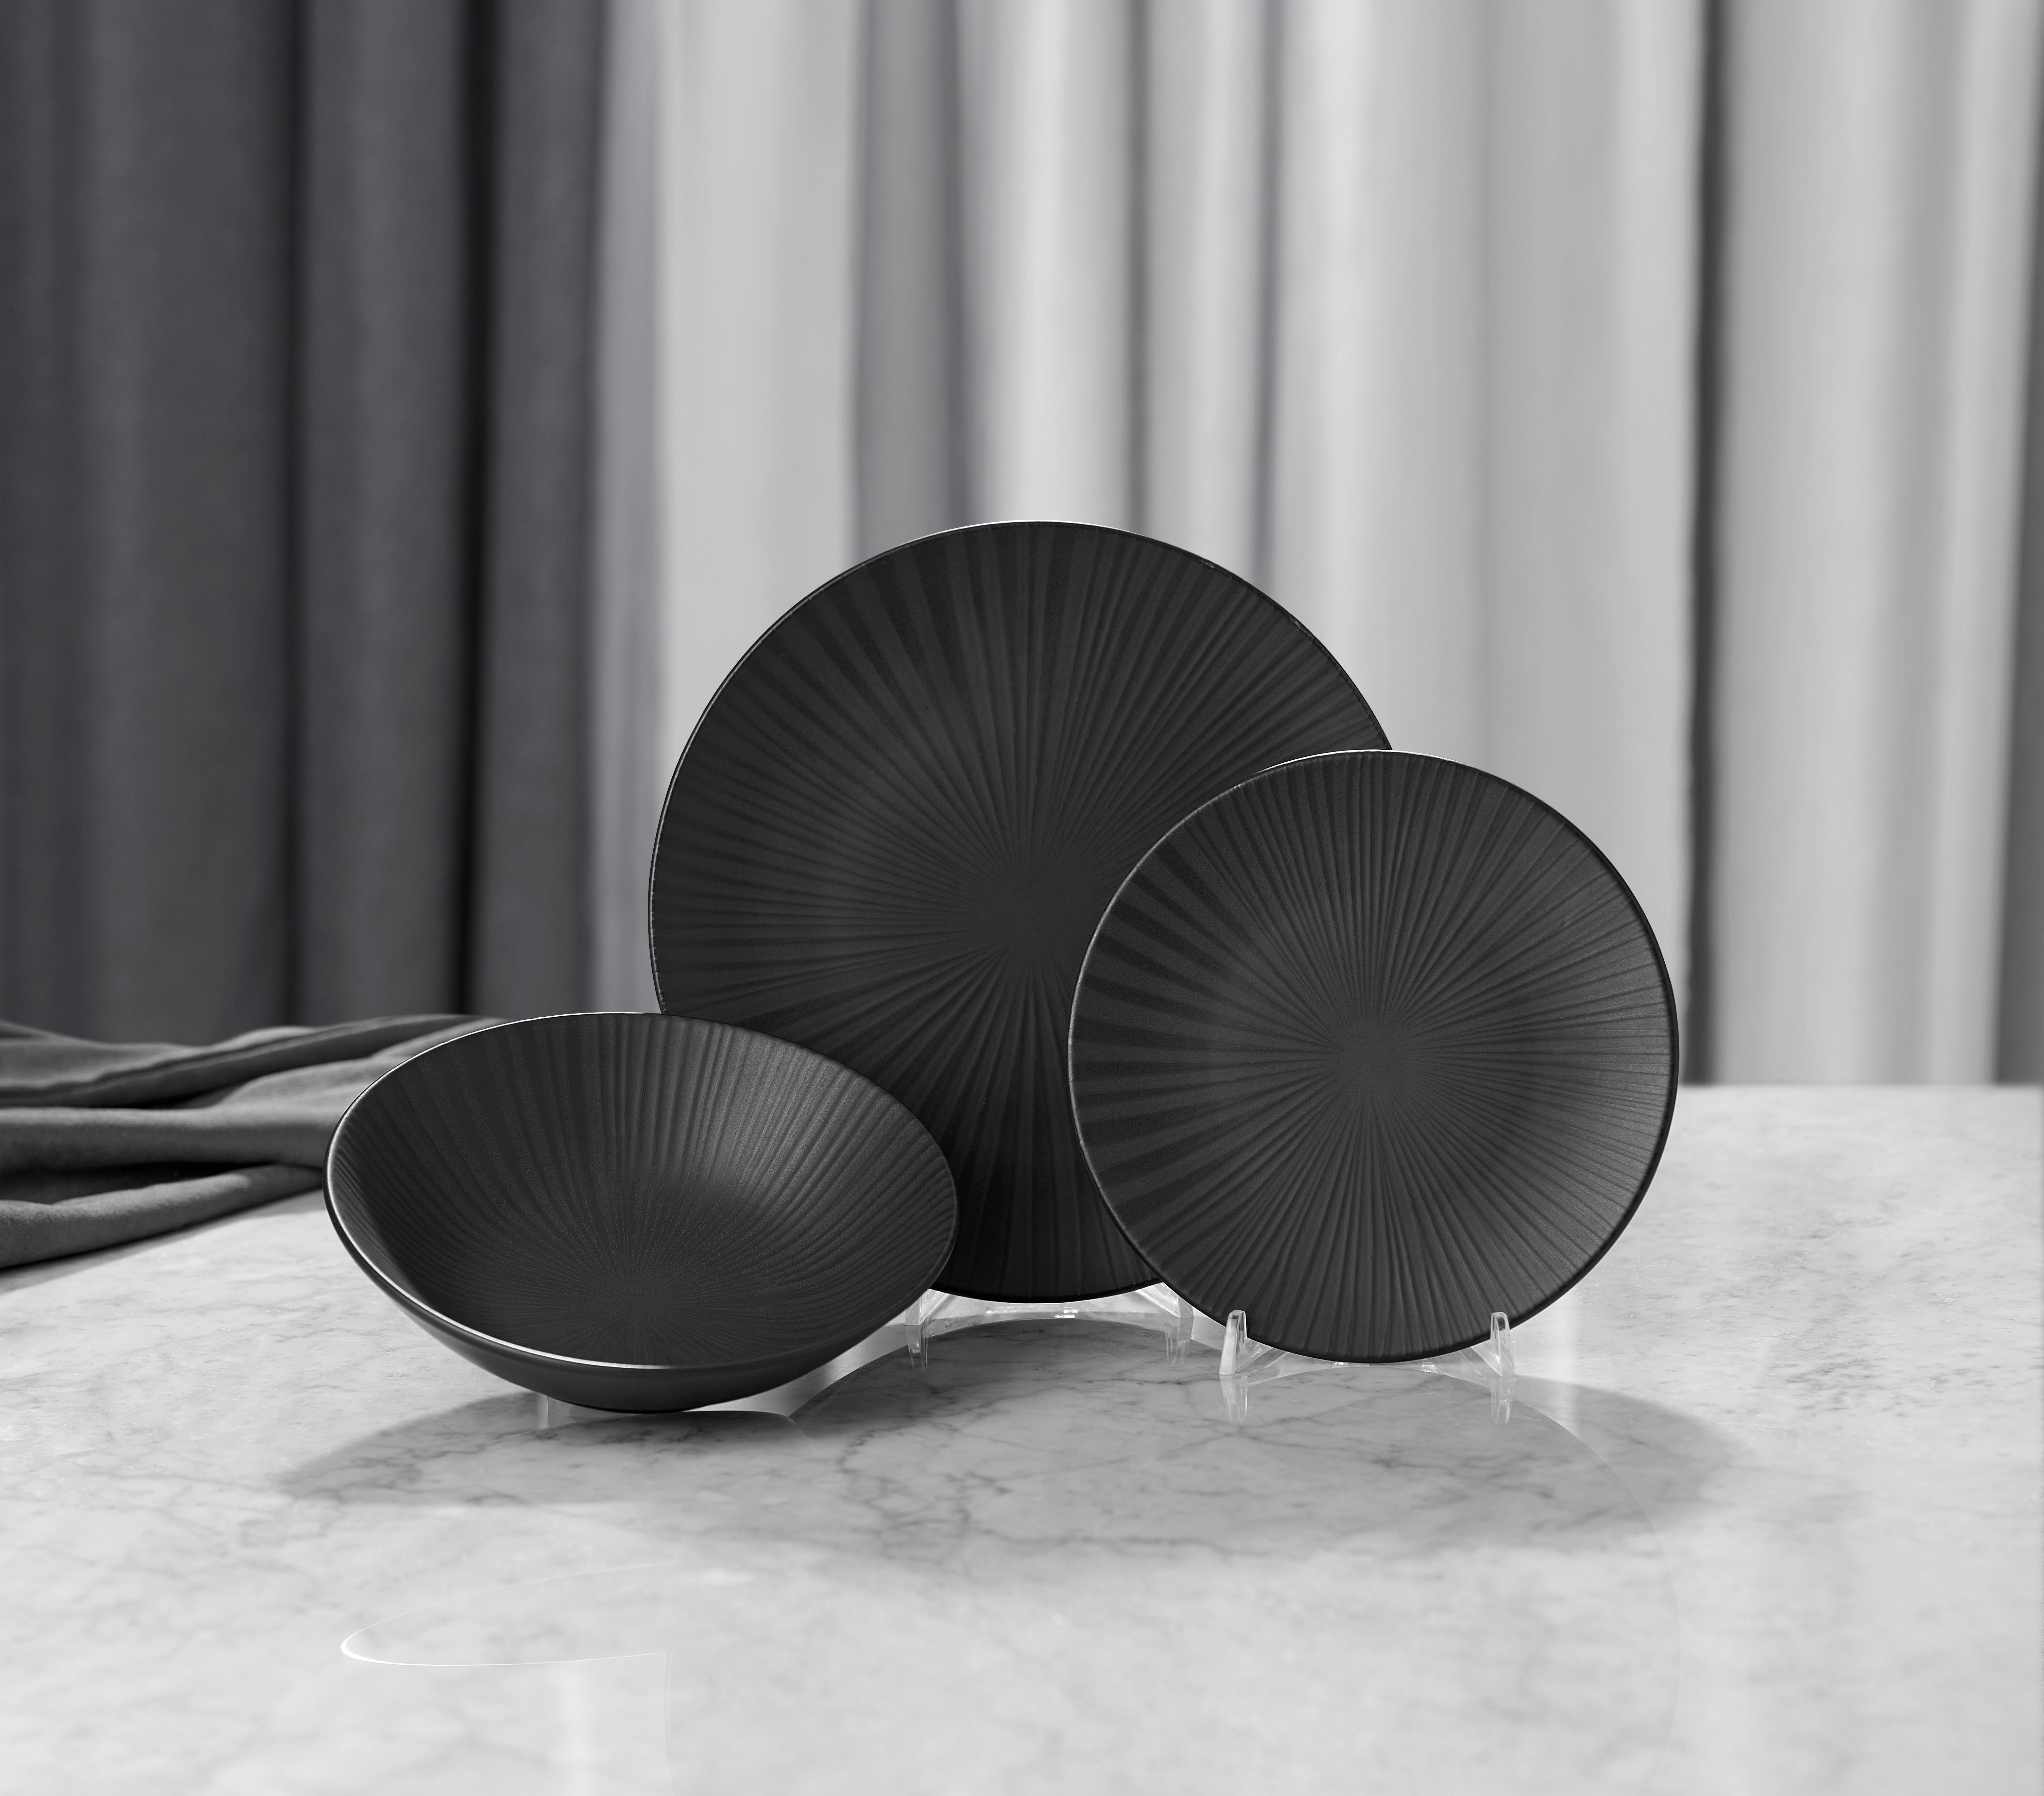 Tafelservice Black aus Steingut, 12-teilig - Schwarz, Modern, Keramik - Premium Living